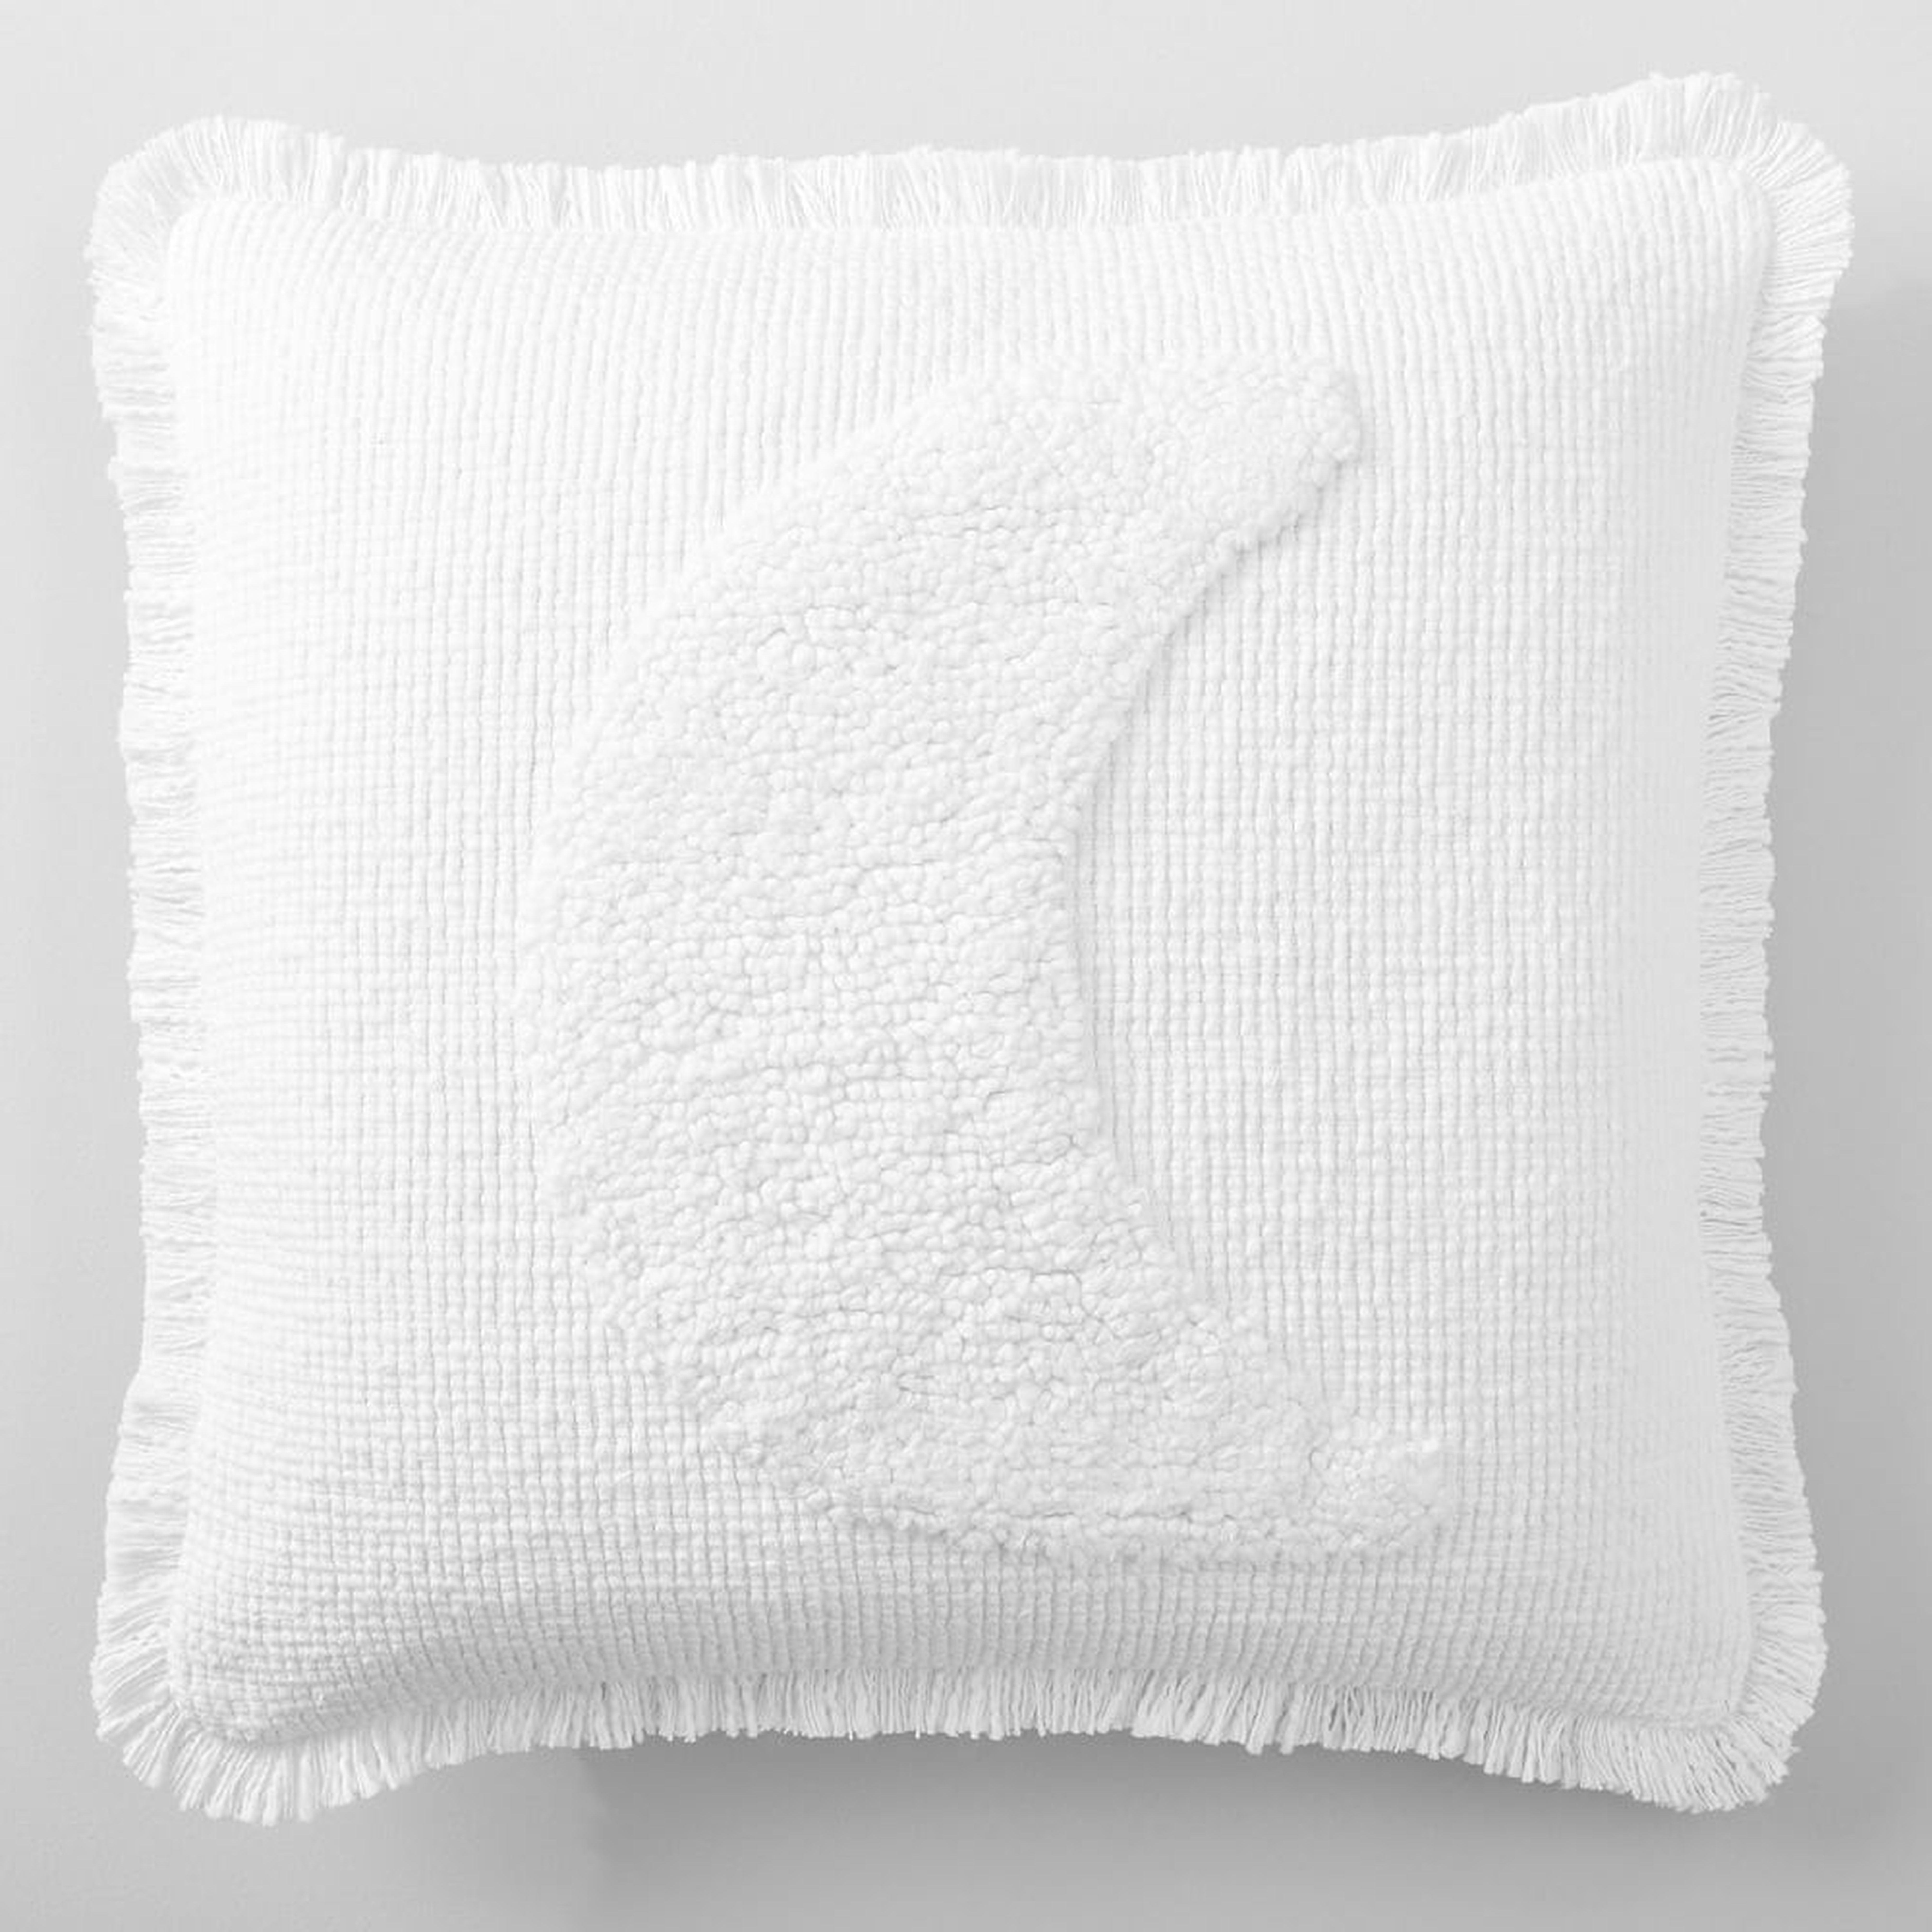 Sanctuary Moon Pillow Cover, 18x18, Ivory - Pottery Barn Teen